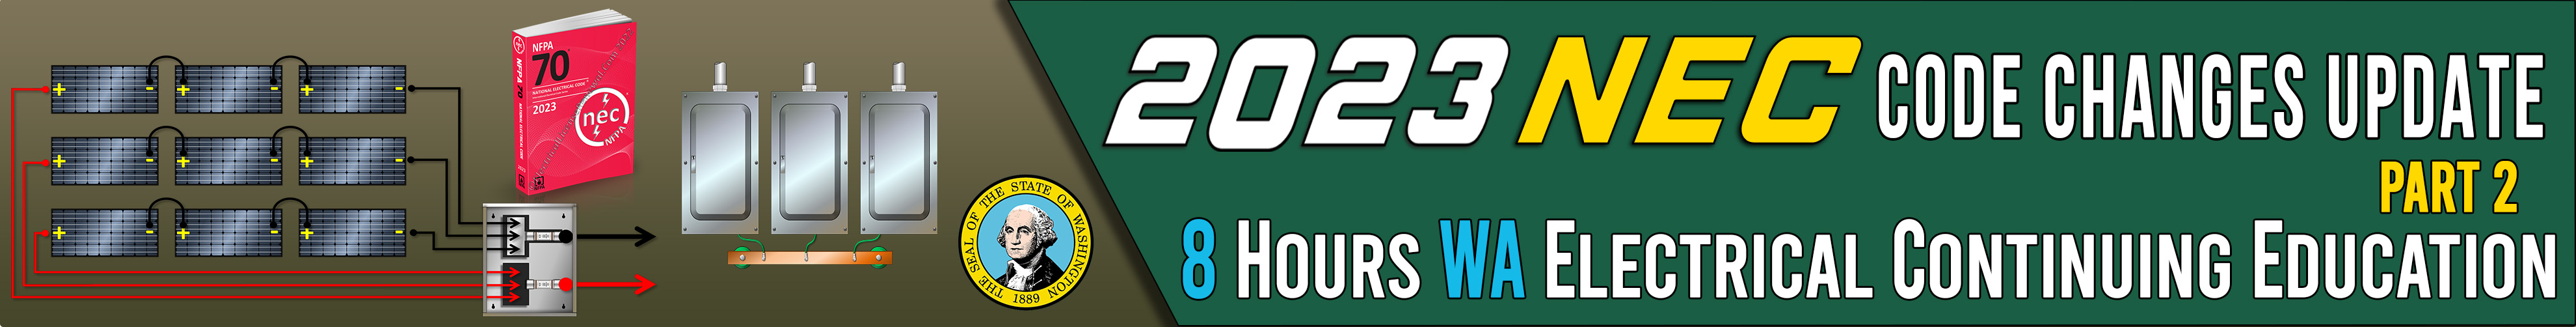 2023 NEC Code Changes Update Part 2 Banner